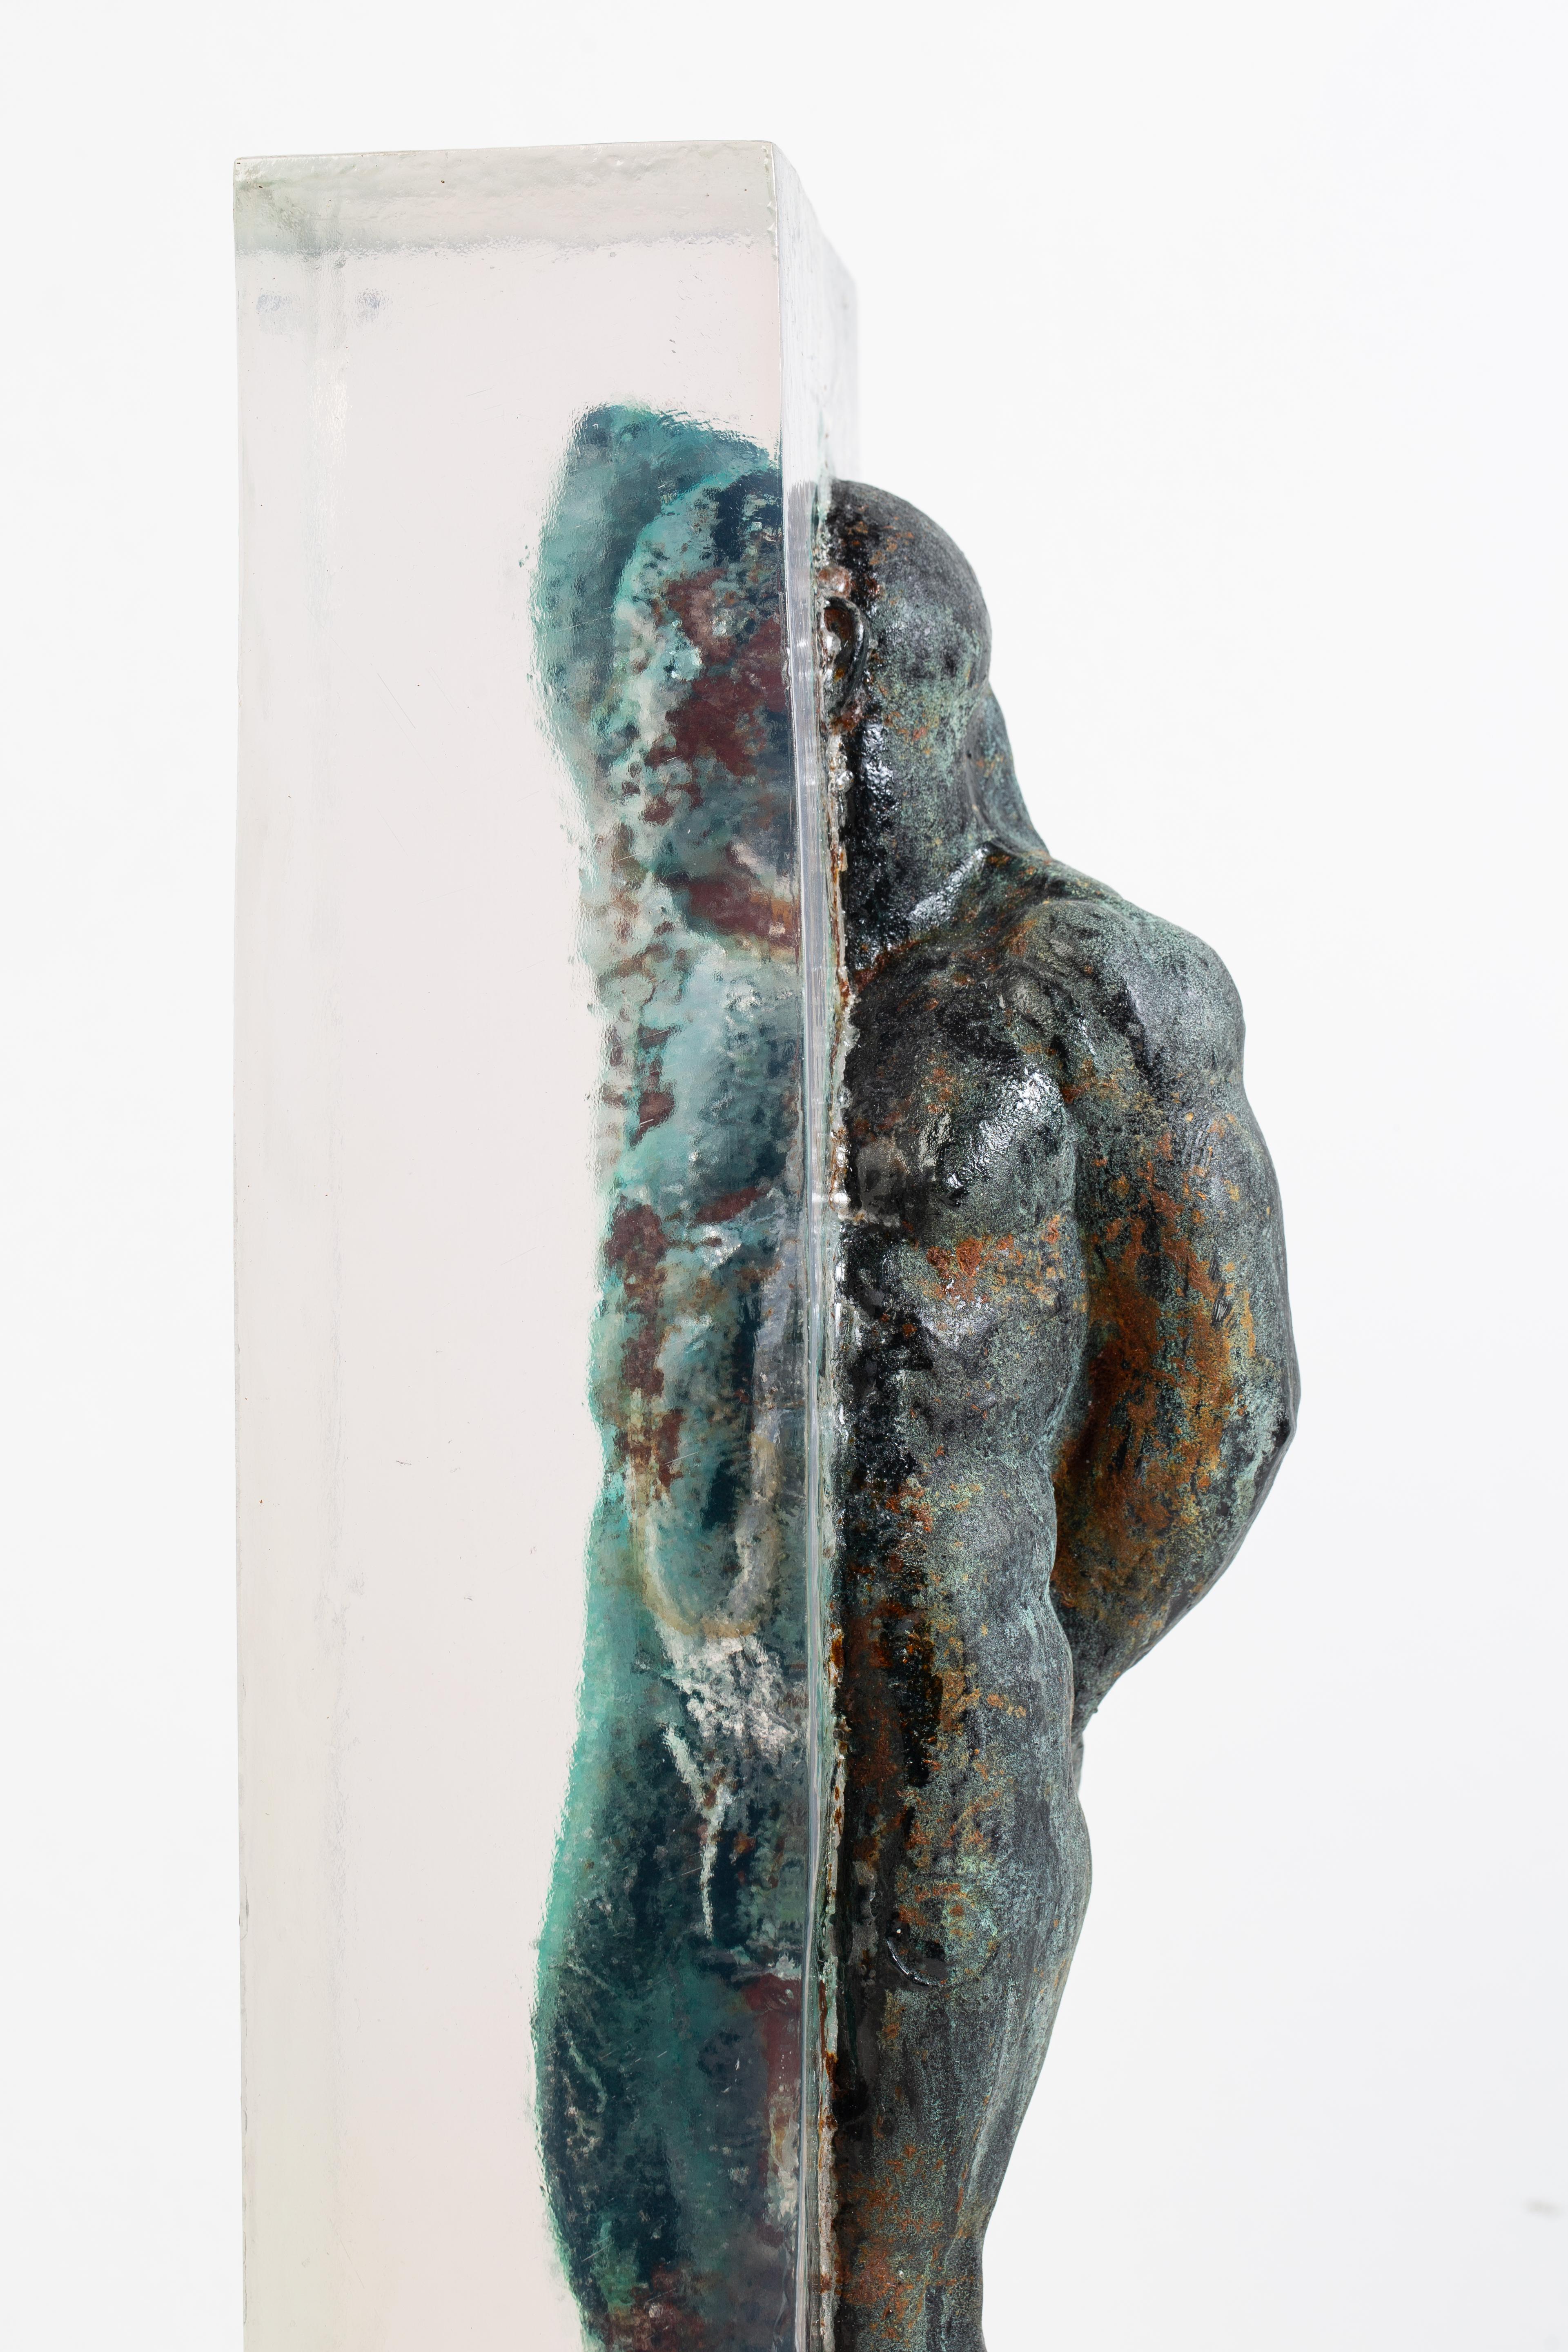 Embedded Slave - After Michelangelo, Sculpture Half Embedded in Clear Resin 4